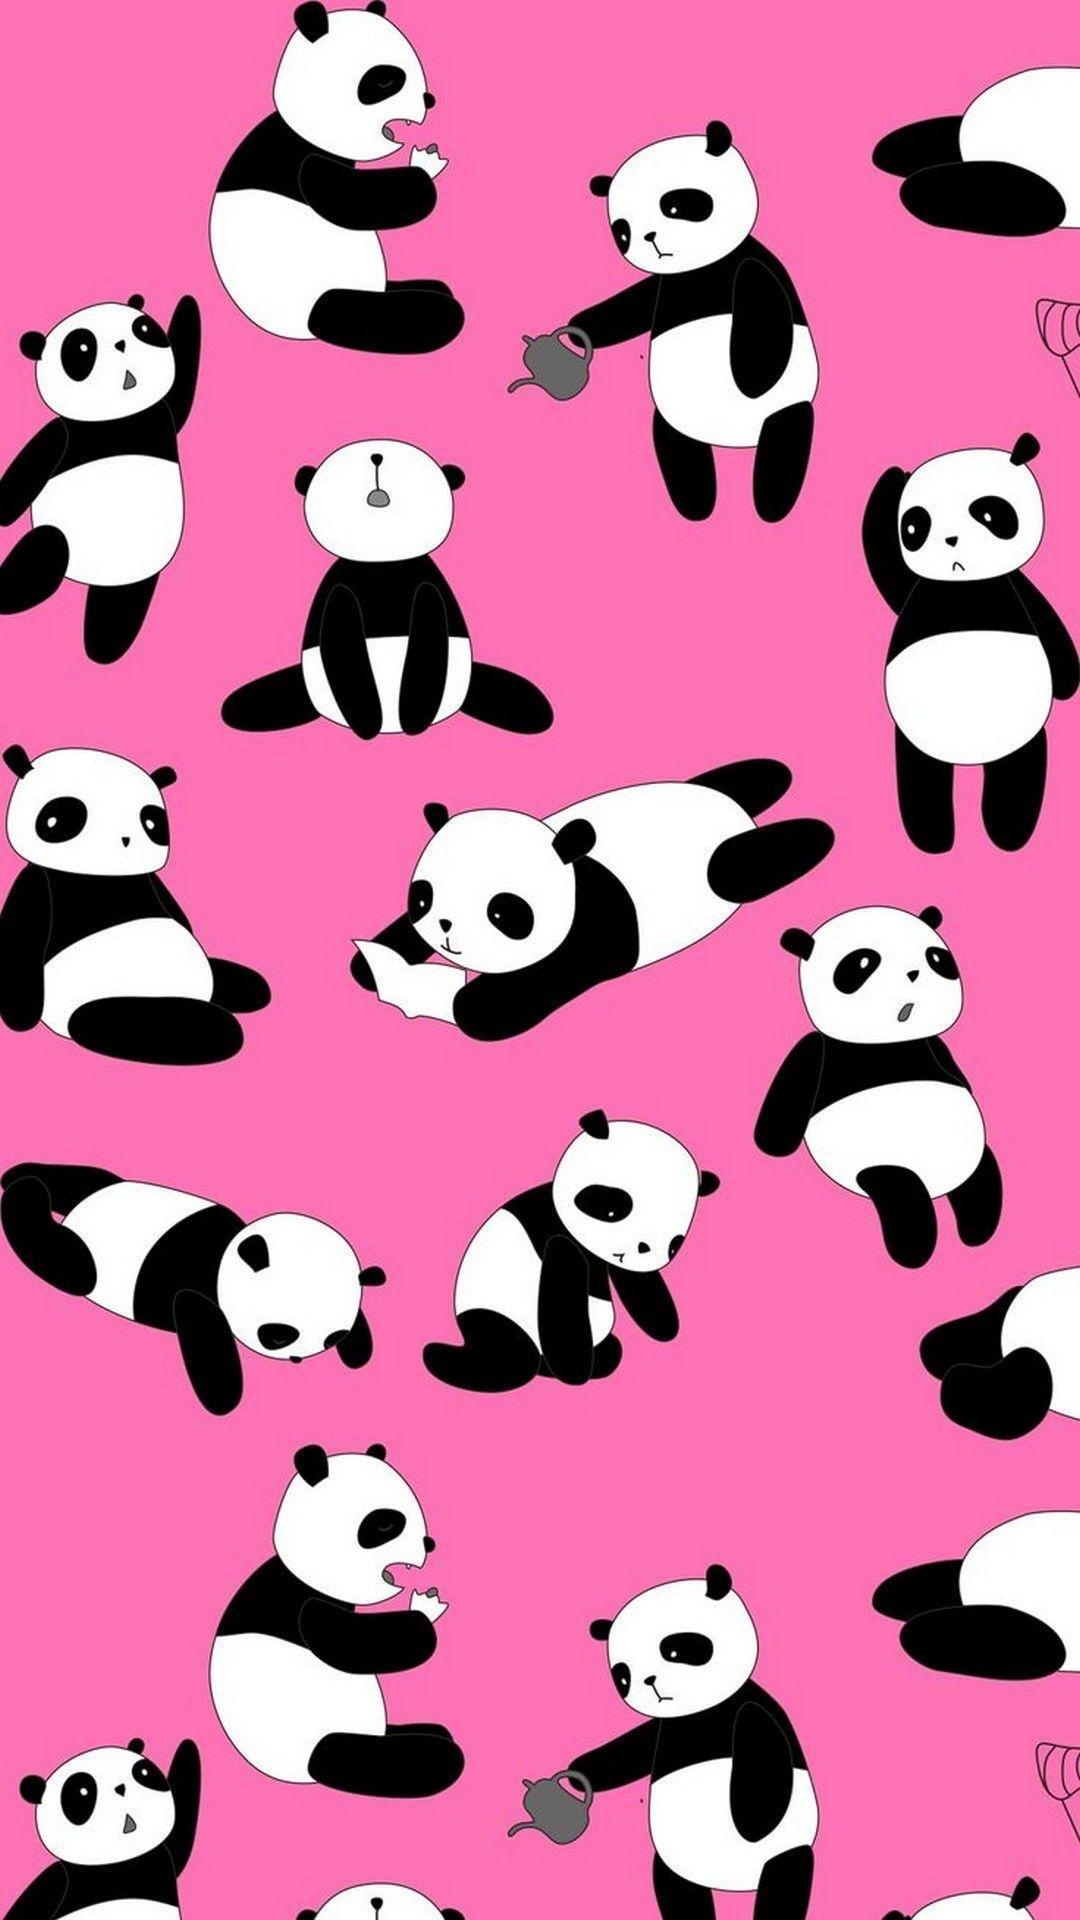 Cute Panda Pink iPhone Wallpaper iPhone Wallpaper. Panda bears wallpaper, Panda wallpaper iphone, Bear wallpaper